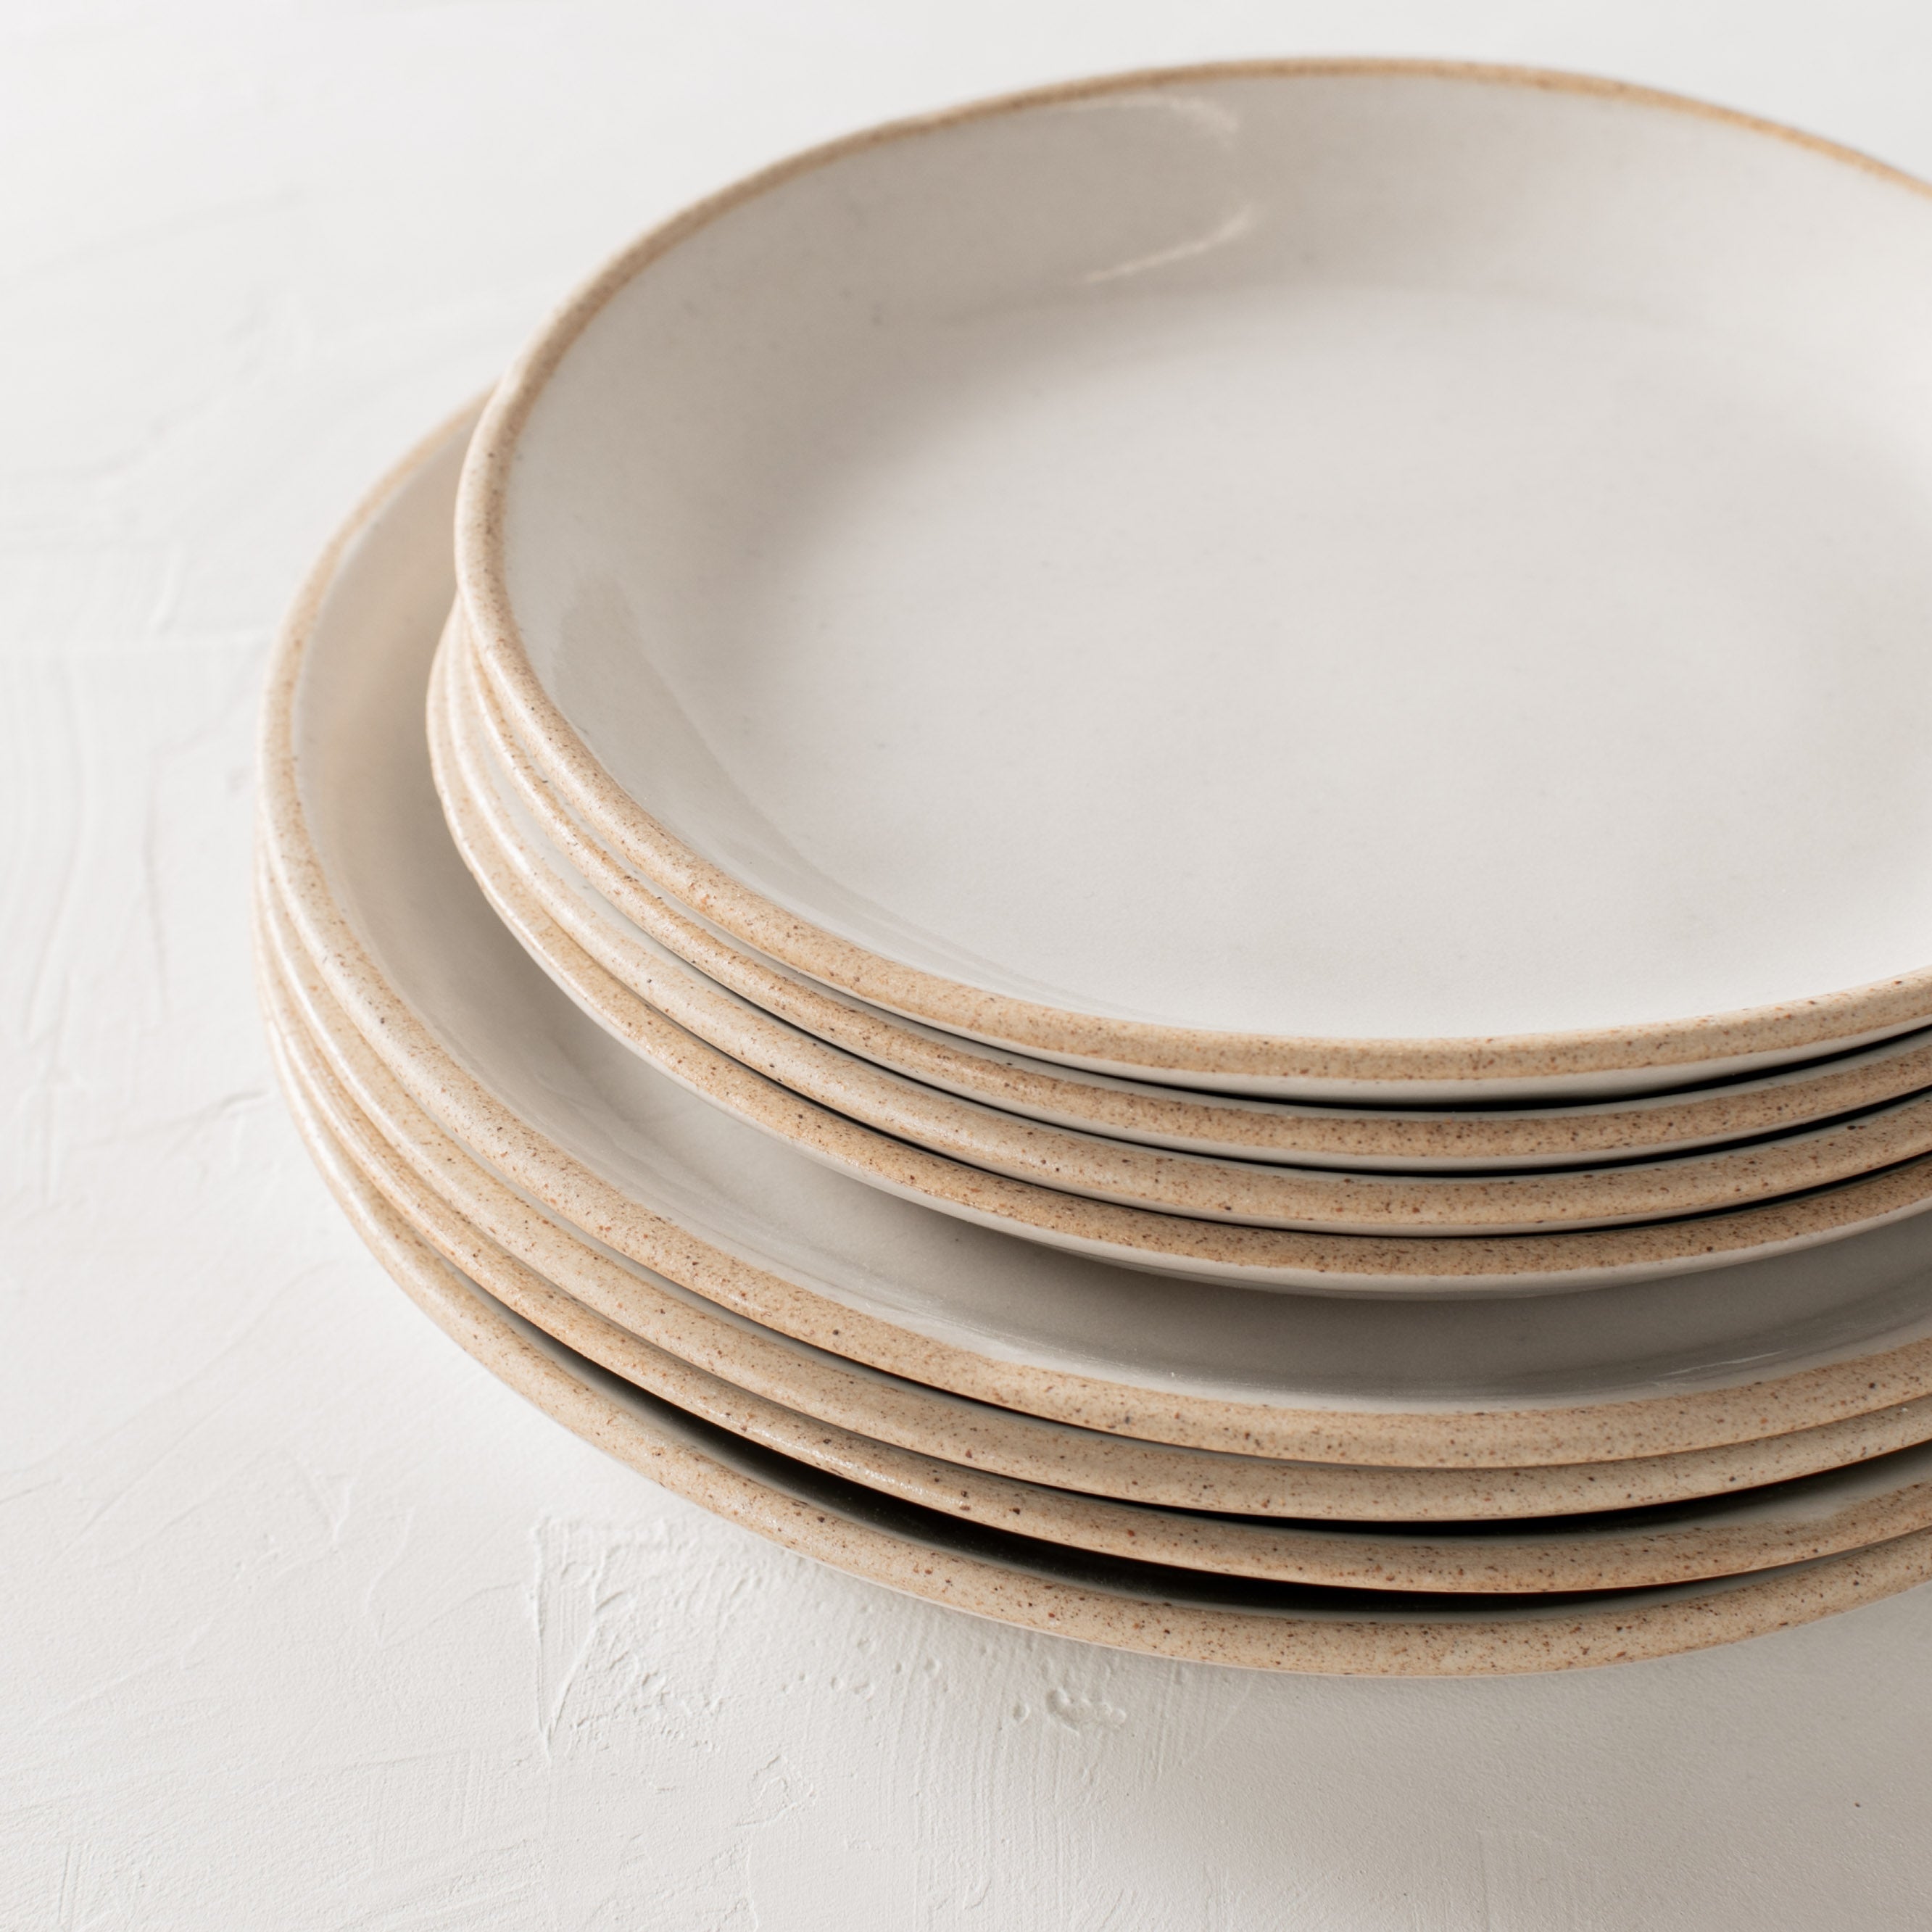 Minimal white ceramic plates stacked, closeup of four salad plates stacked on four dinner plates. Handmade ceramic plates, designed and sold by Convivial Production, Kansas City ceramics.